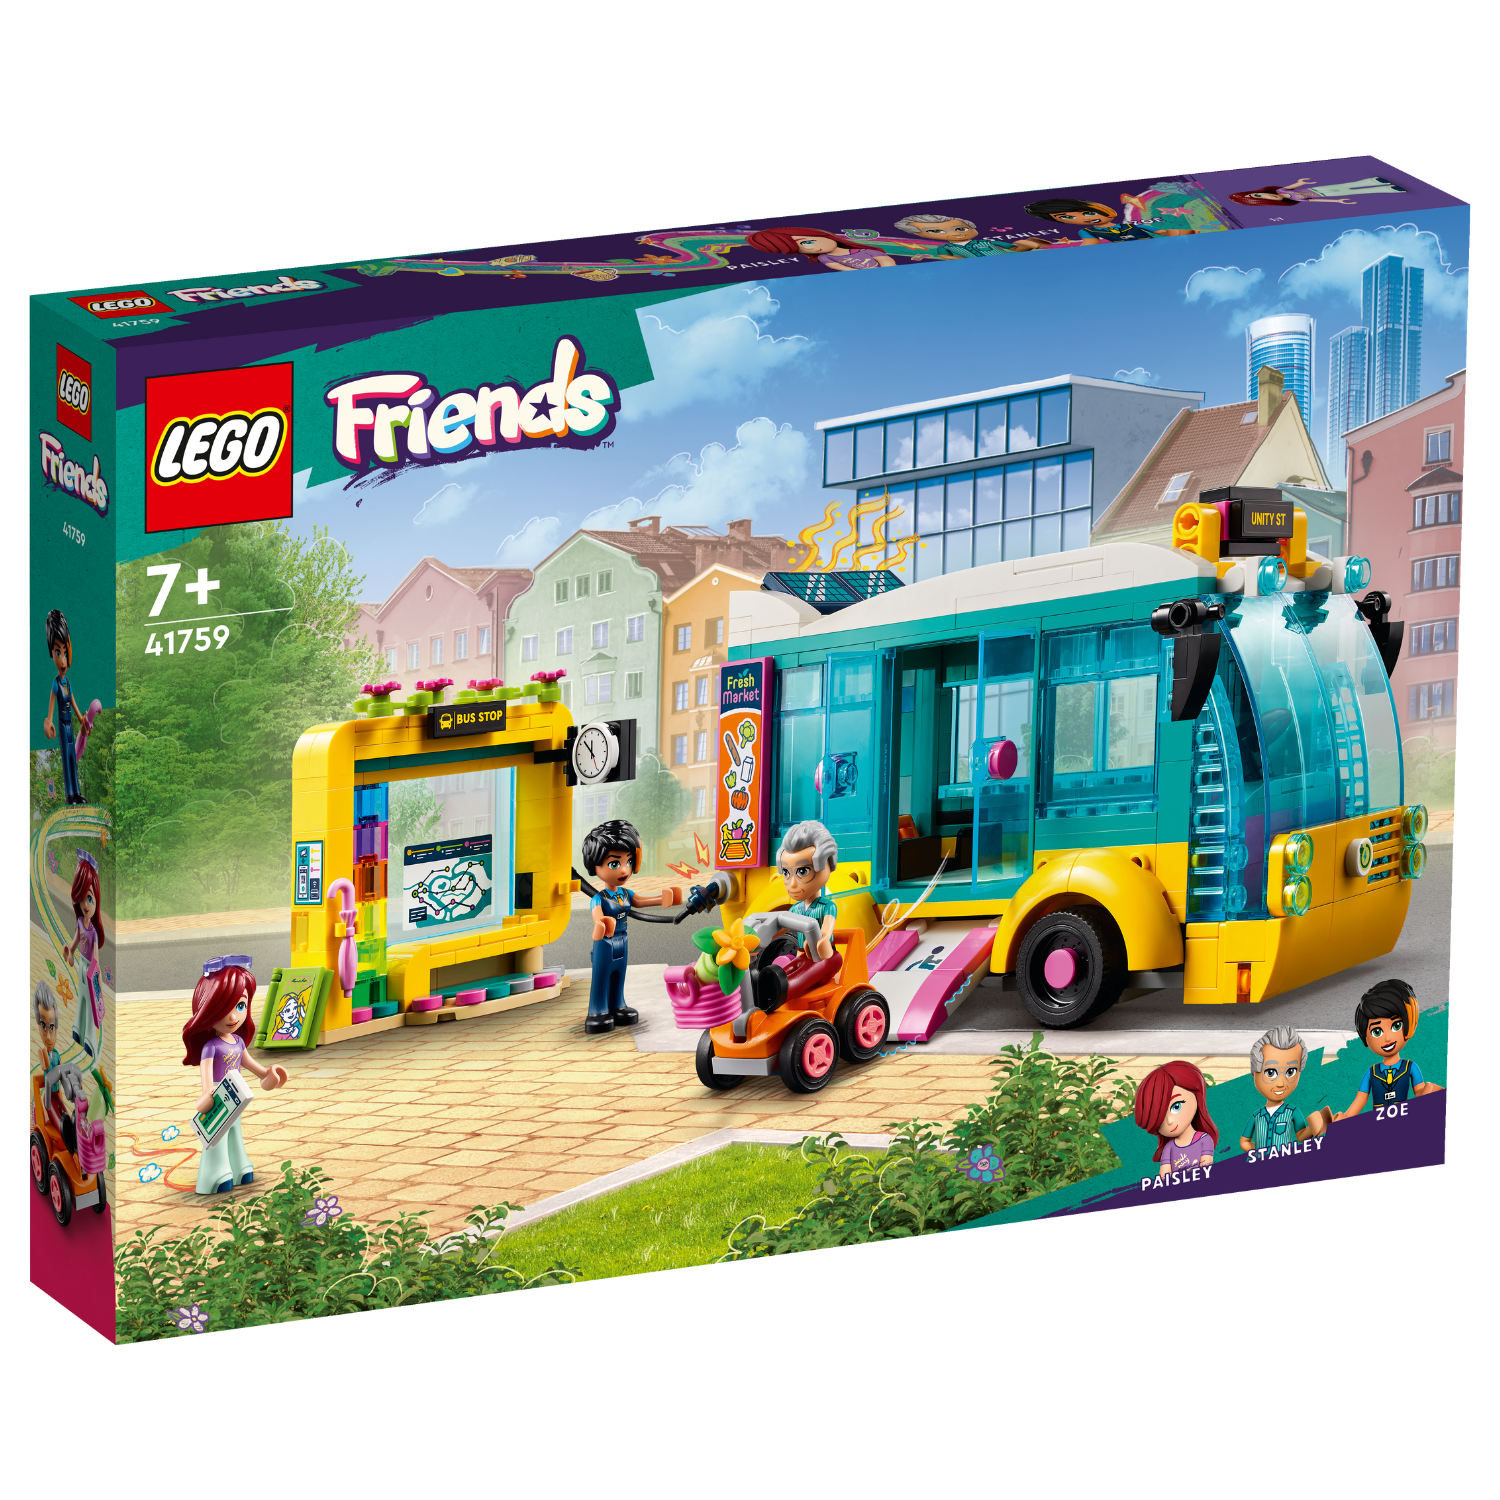 LEGO Friends 41759 Heartlake City Bus 1